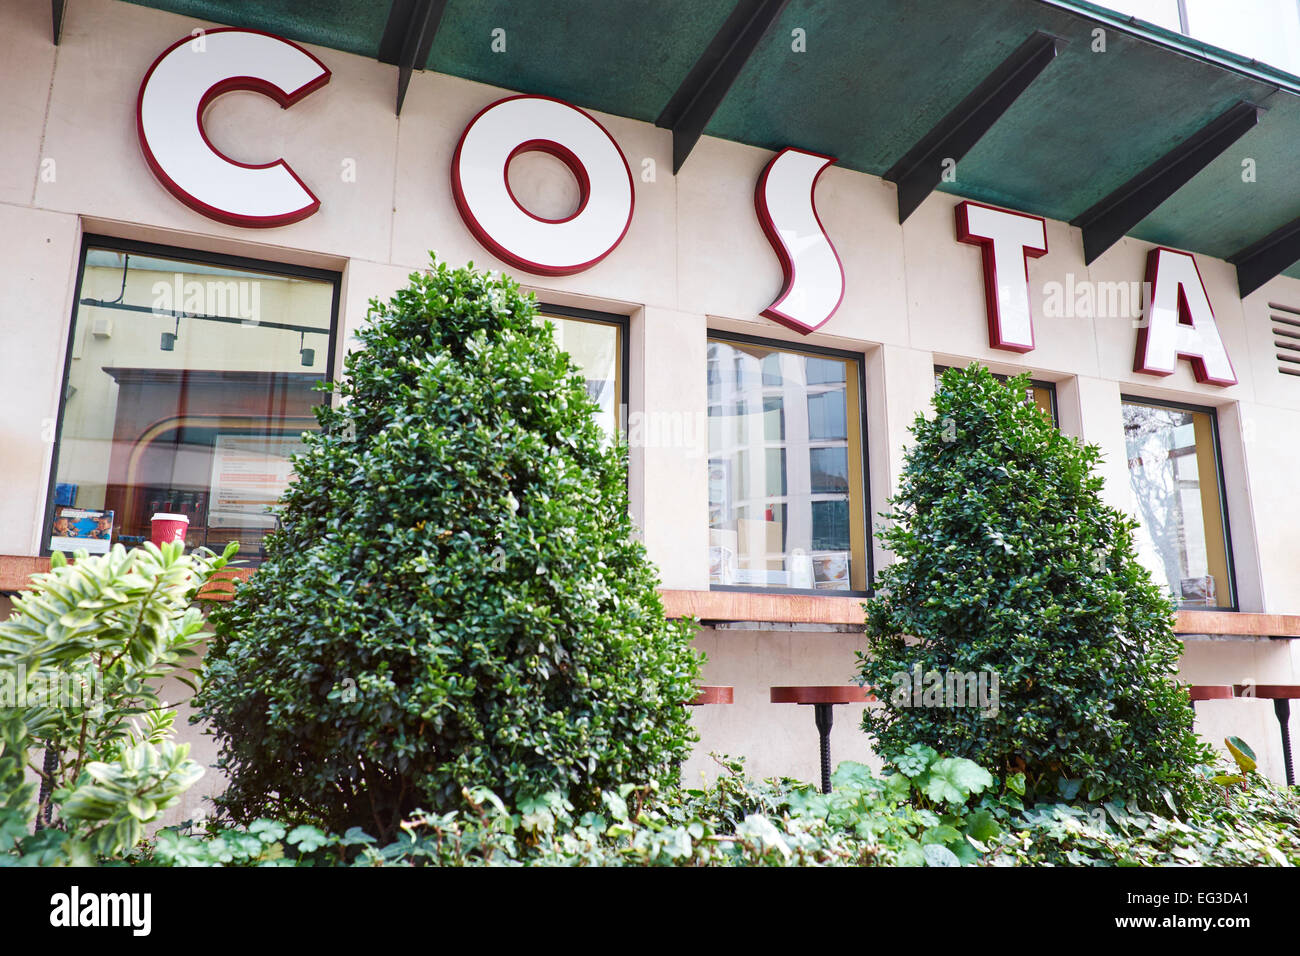 Costa Coffee Foster Lane Cheapside City Of London UK Stockfoto